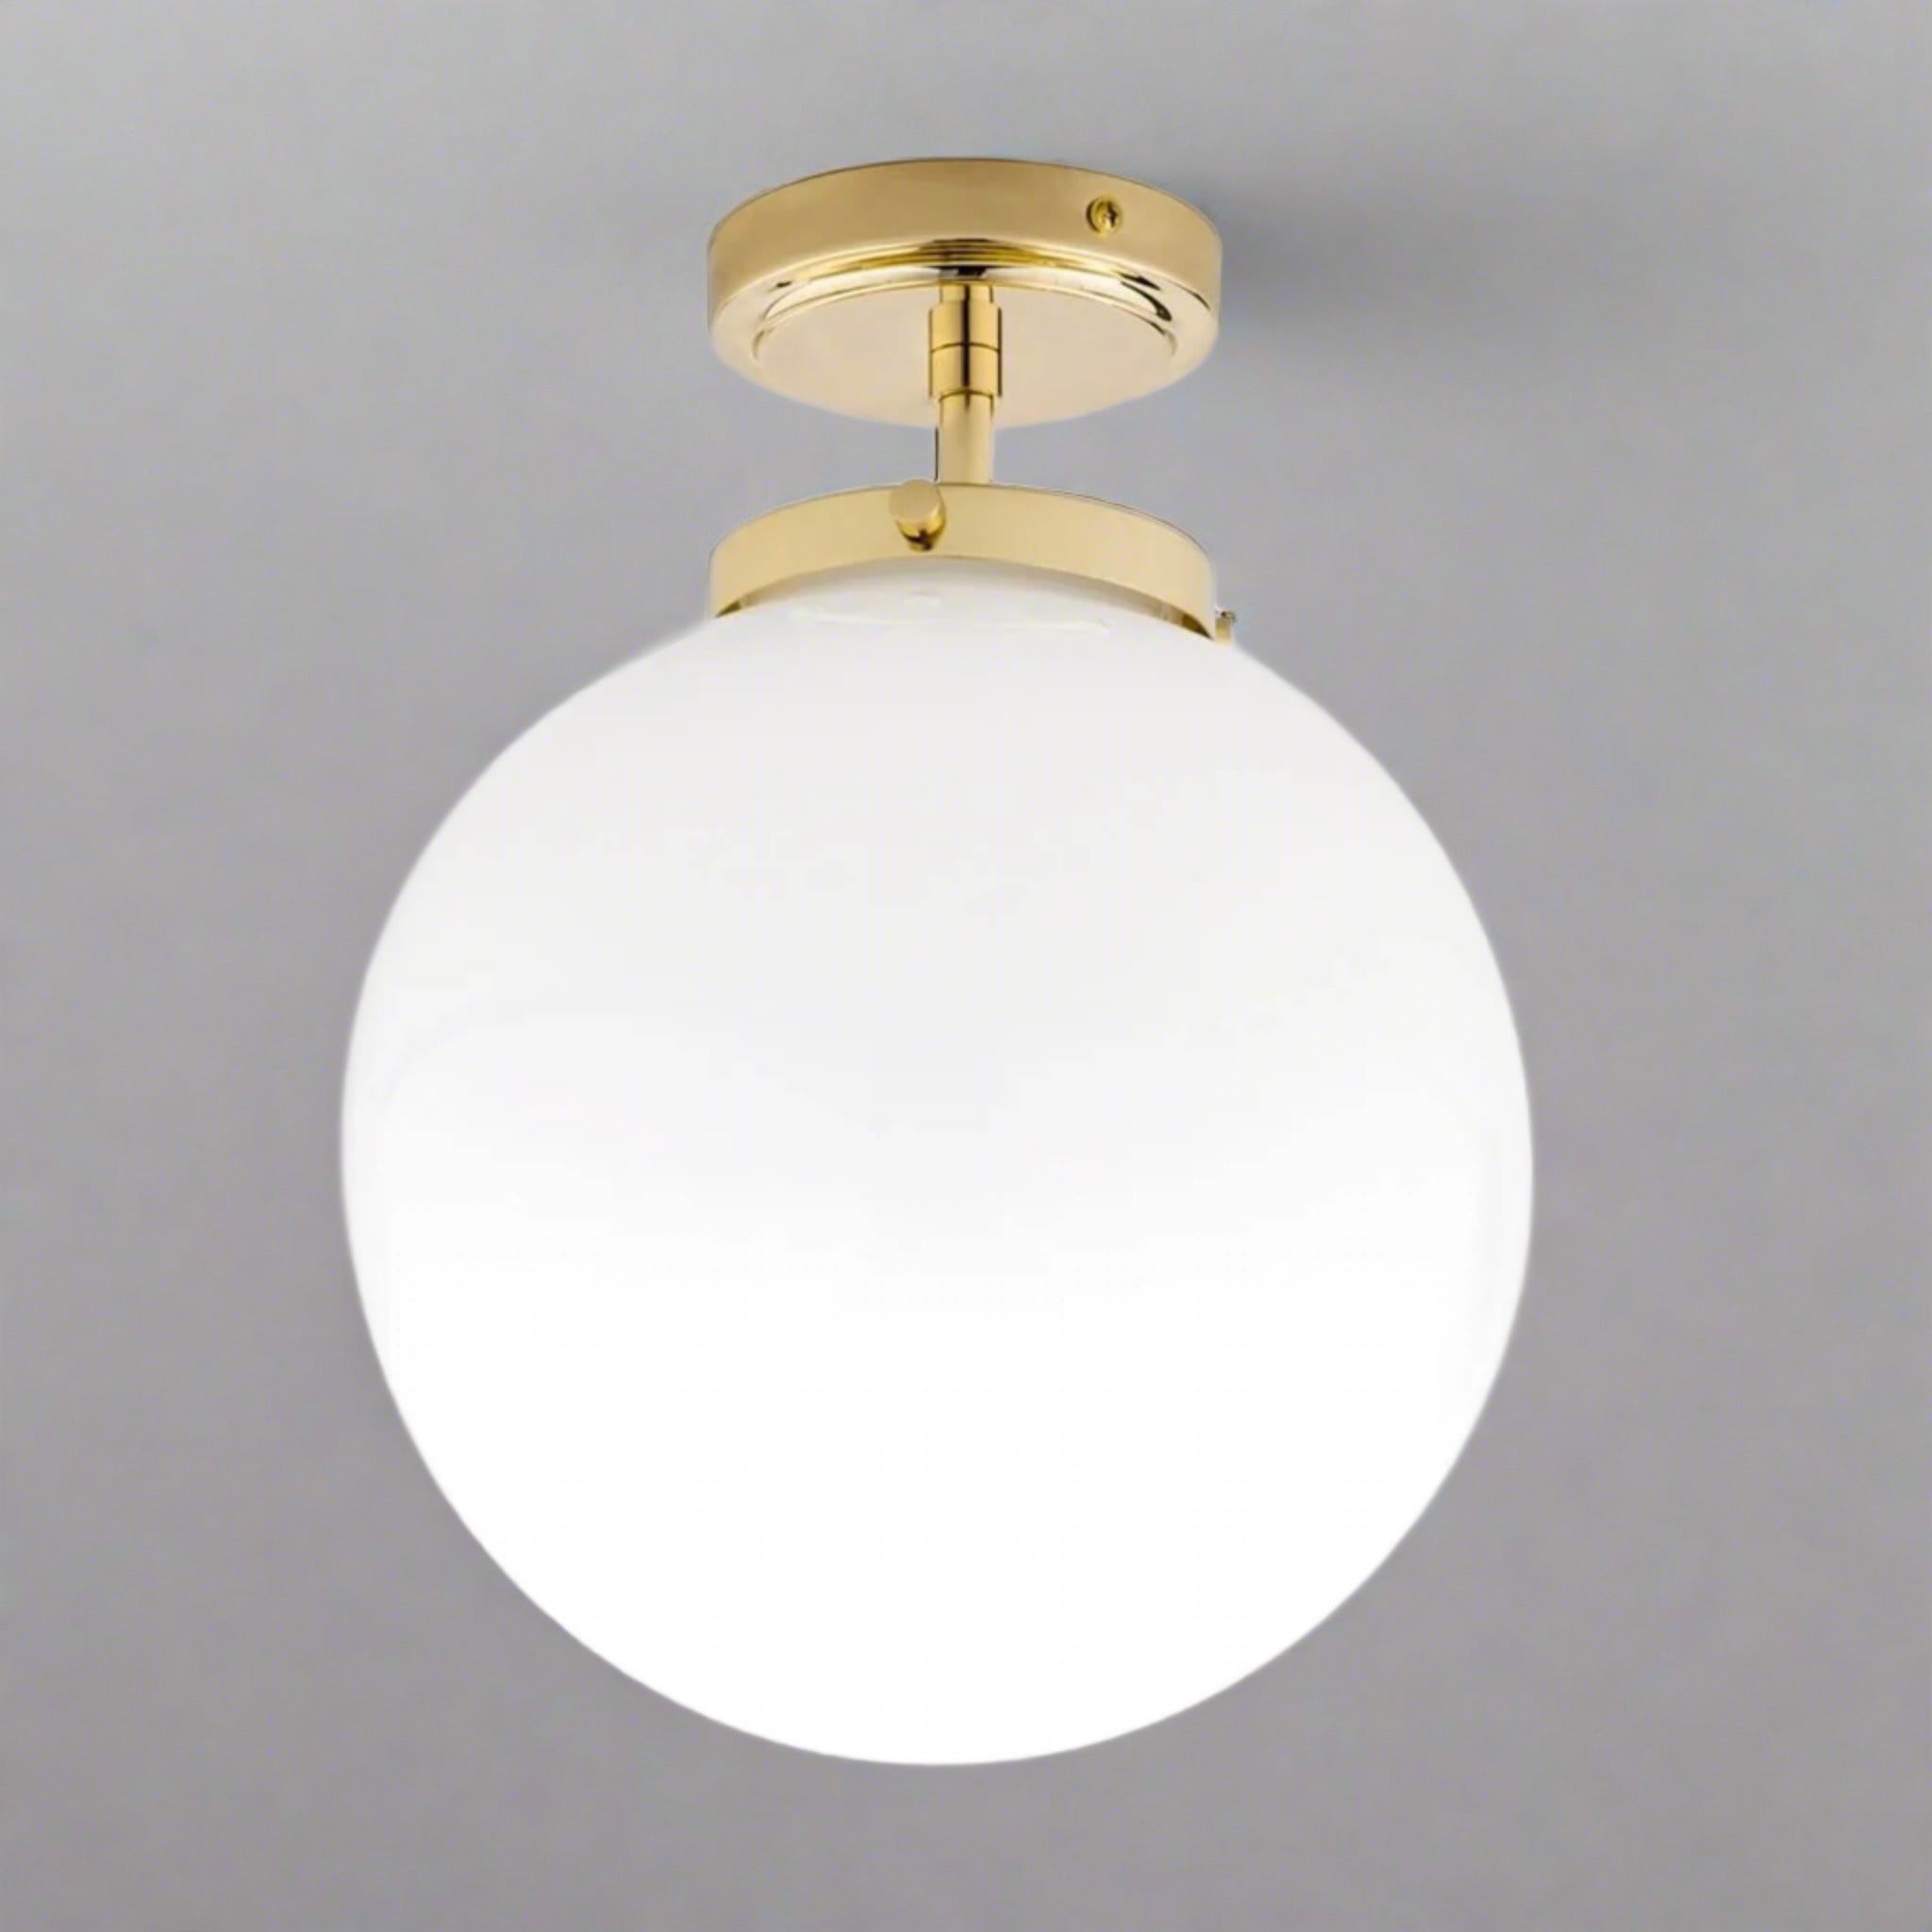 Hyde Globe Bathroom Ceiling Light Ip44 Semi Flush Lampsy